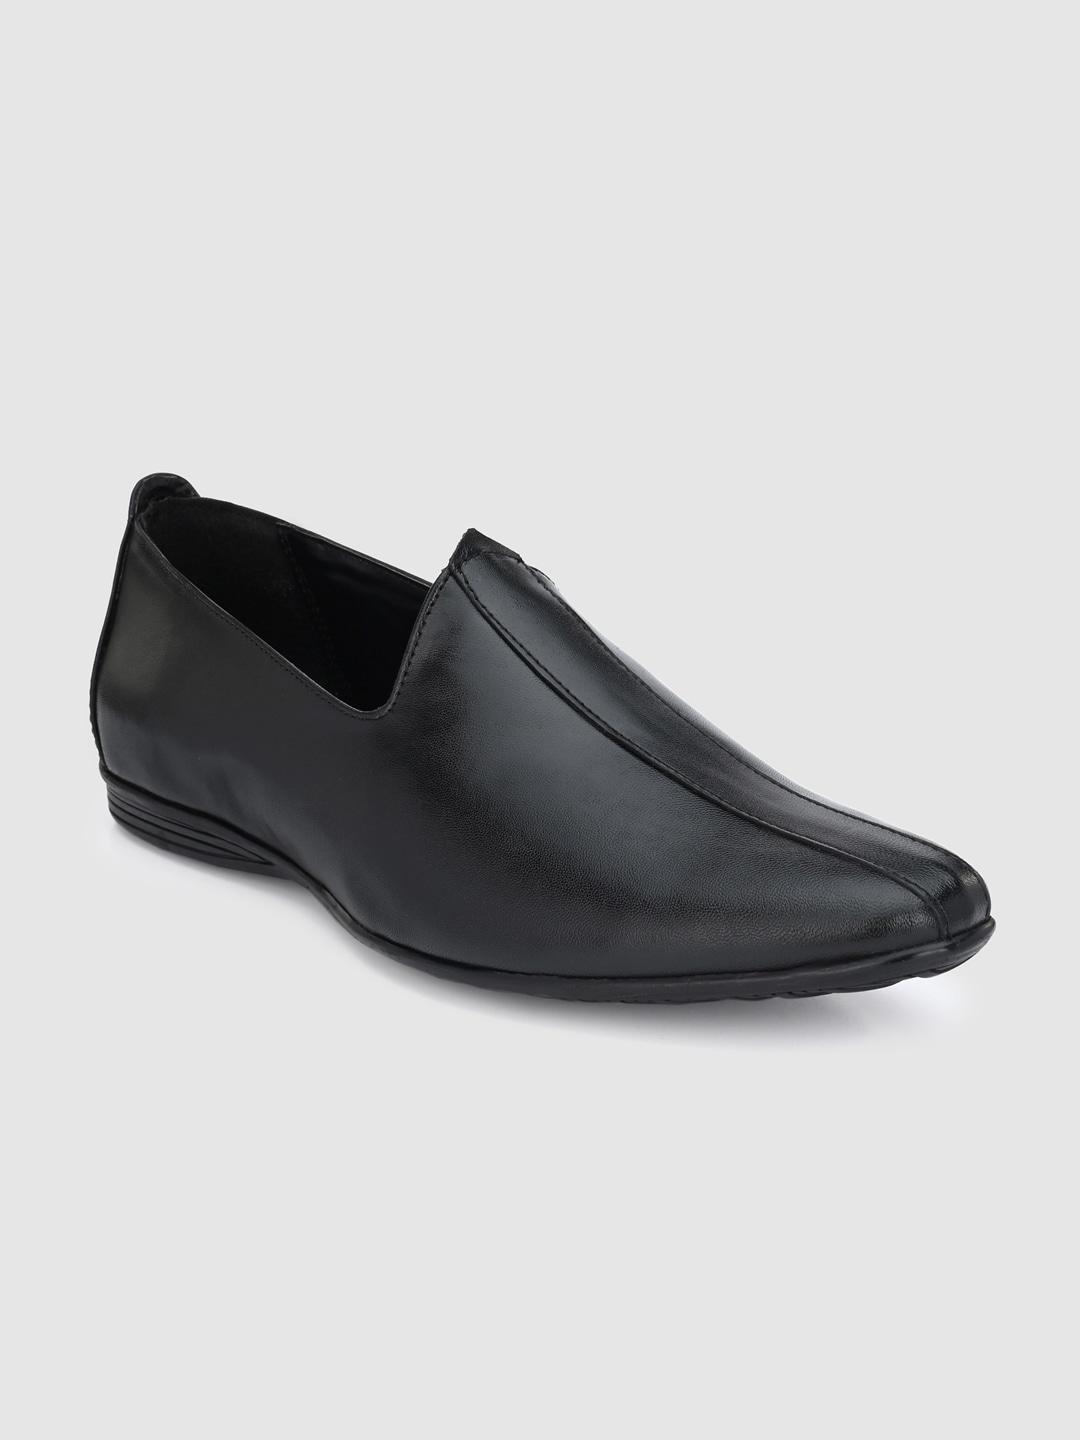 house of pataudi men black solid slip-on shoes